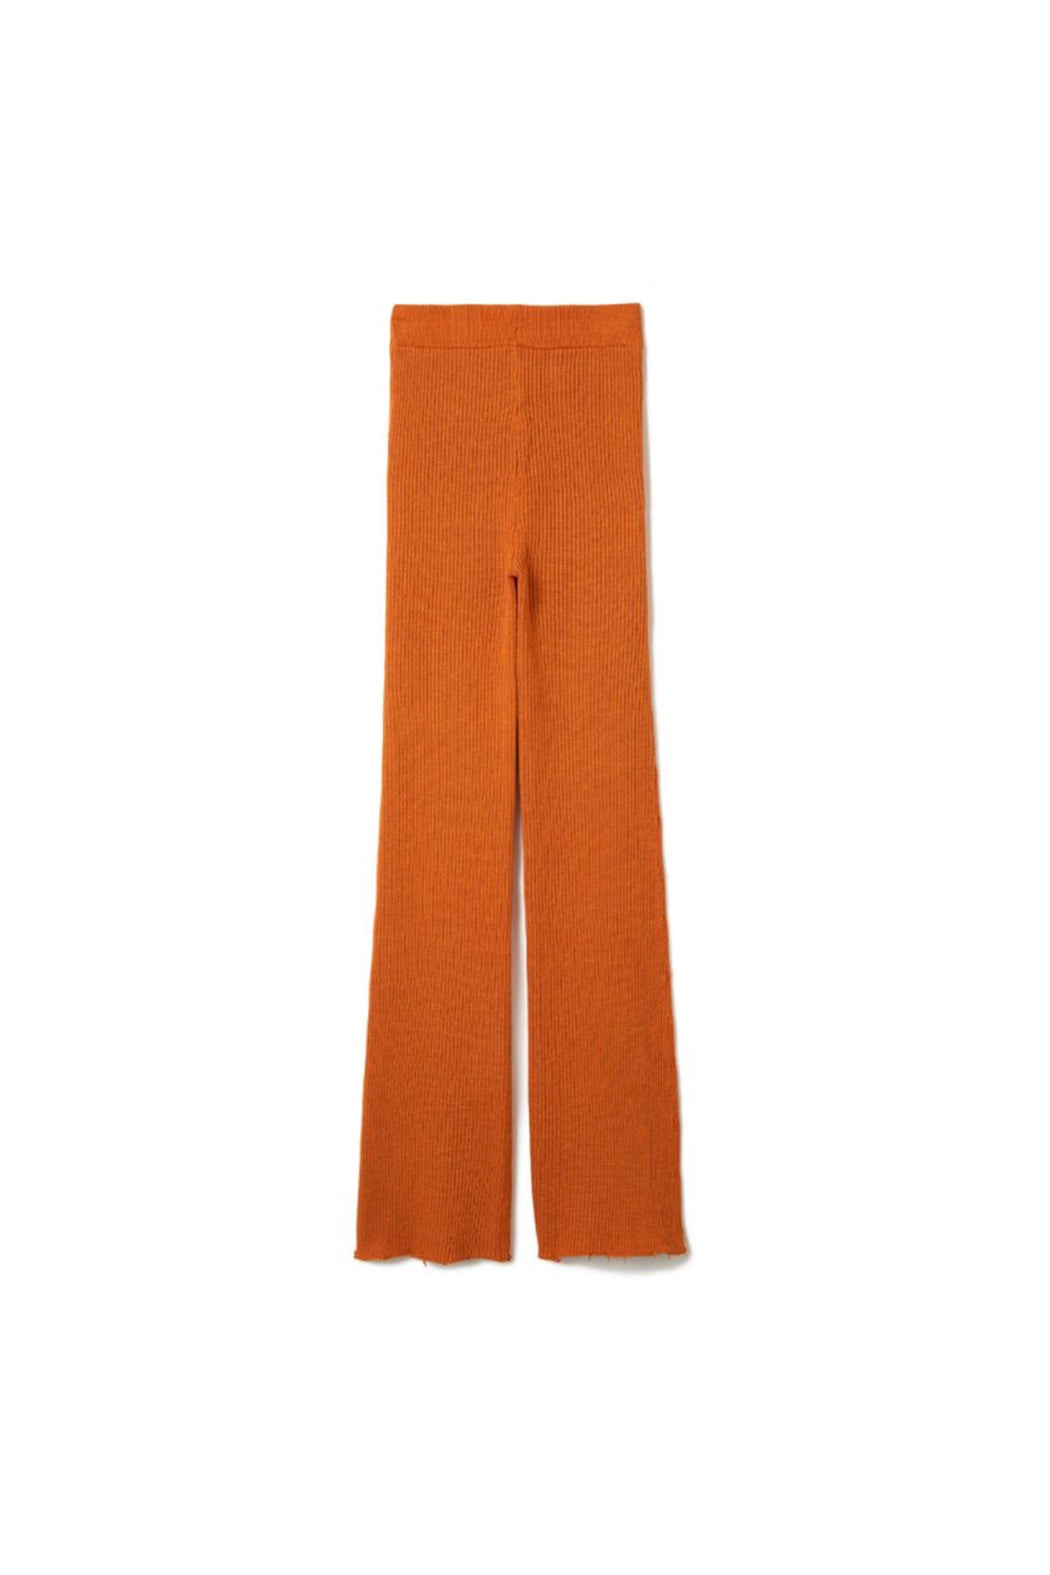 Double Face Rib Line Pants - Orange